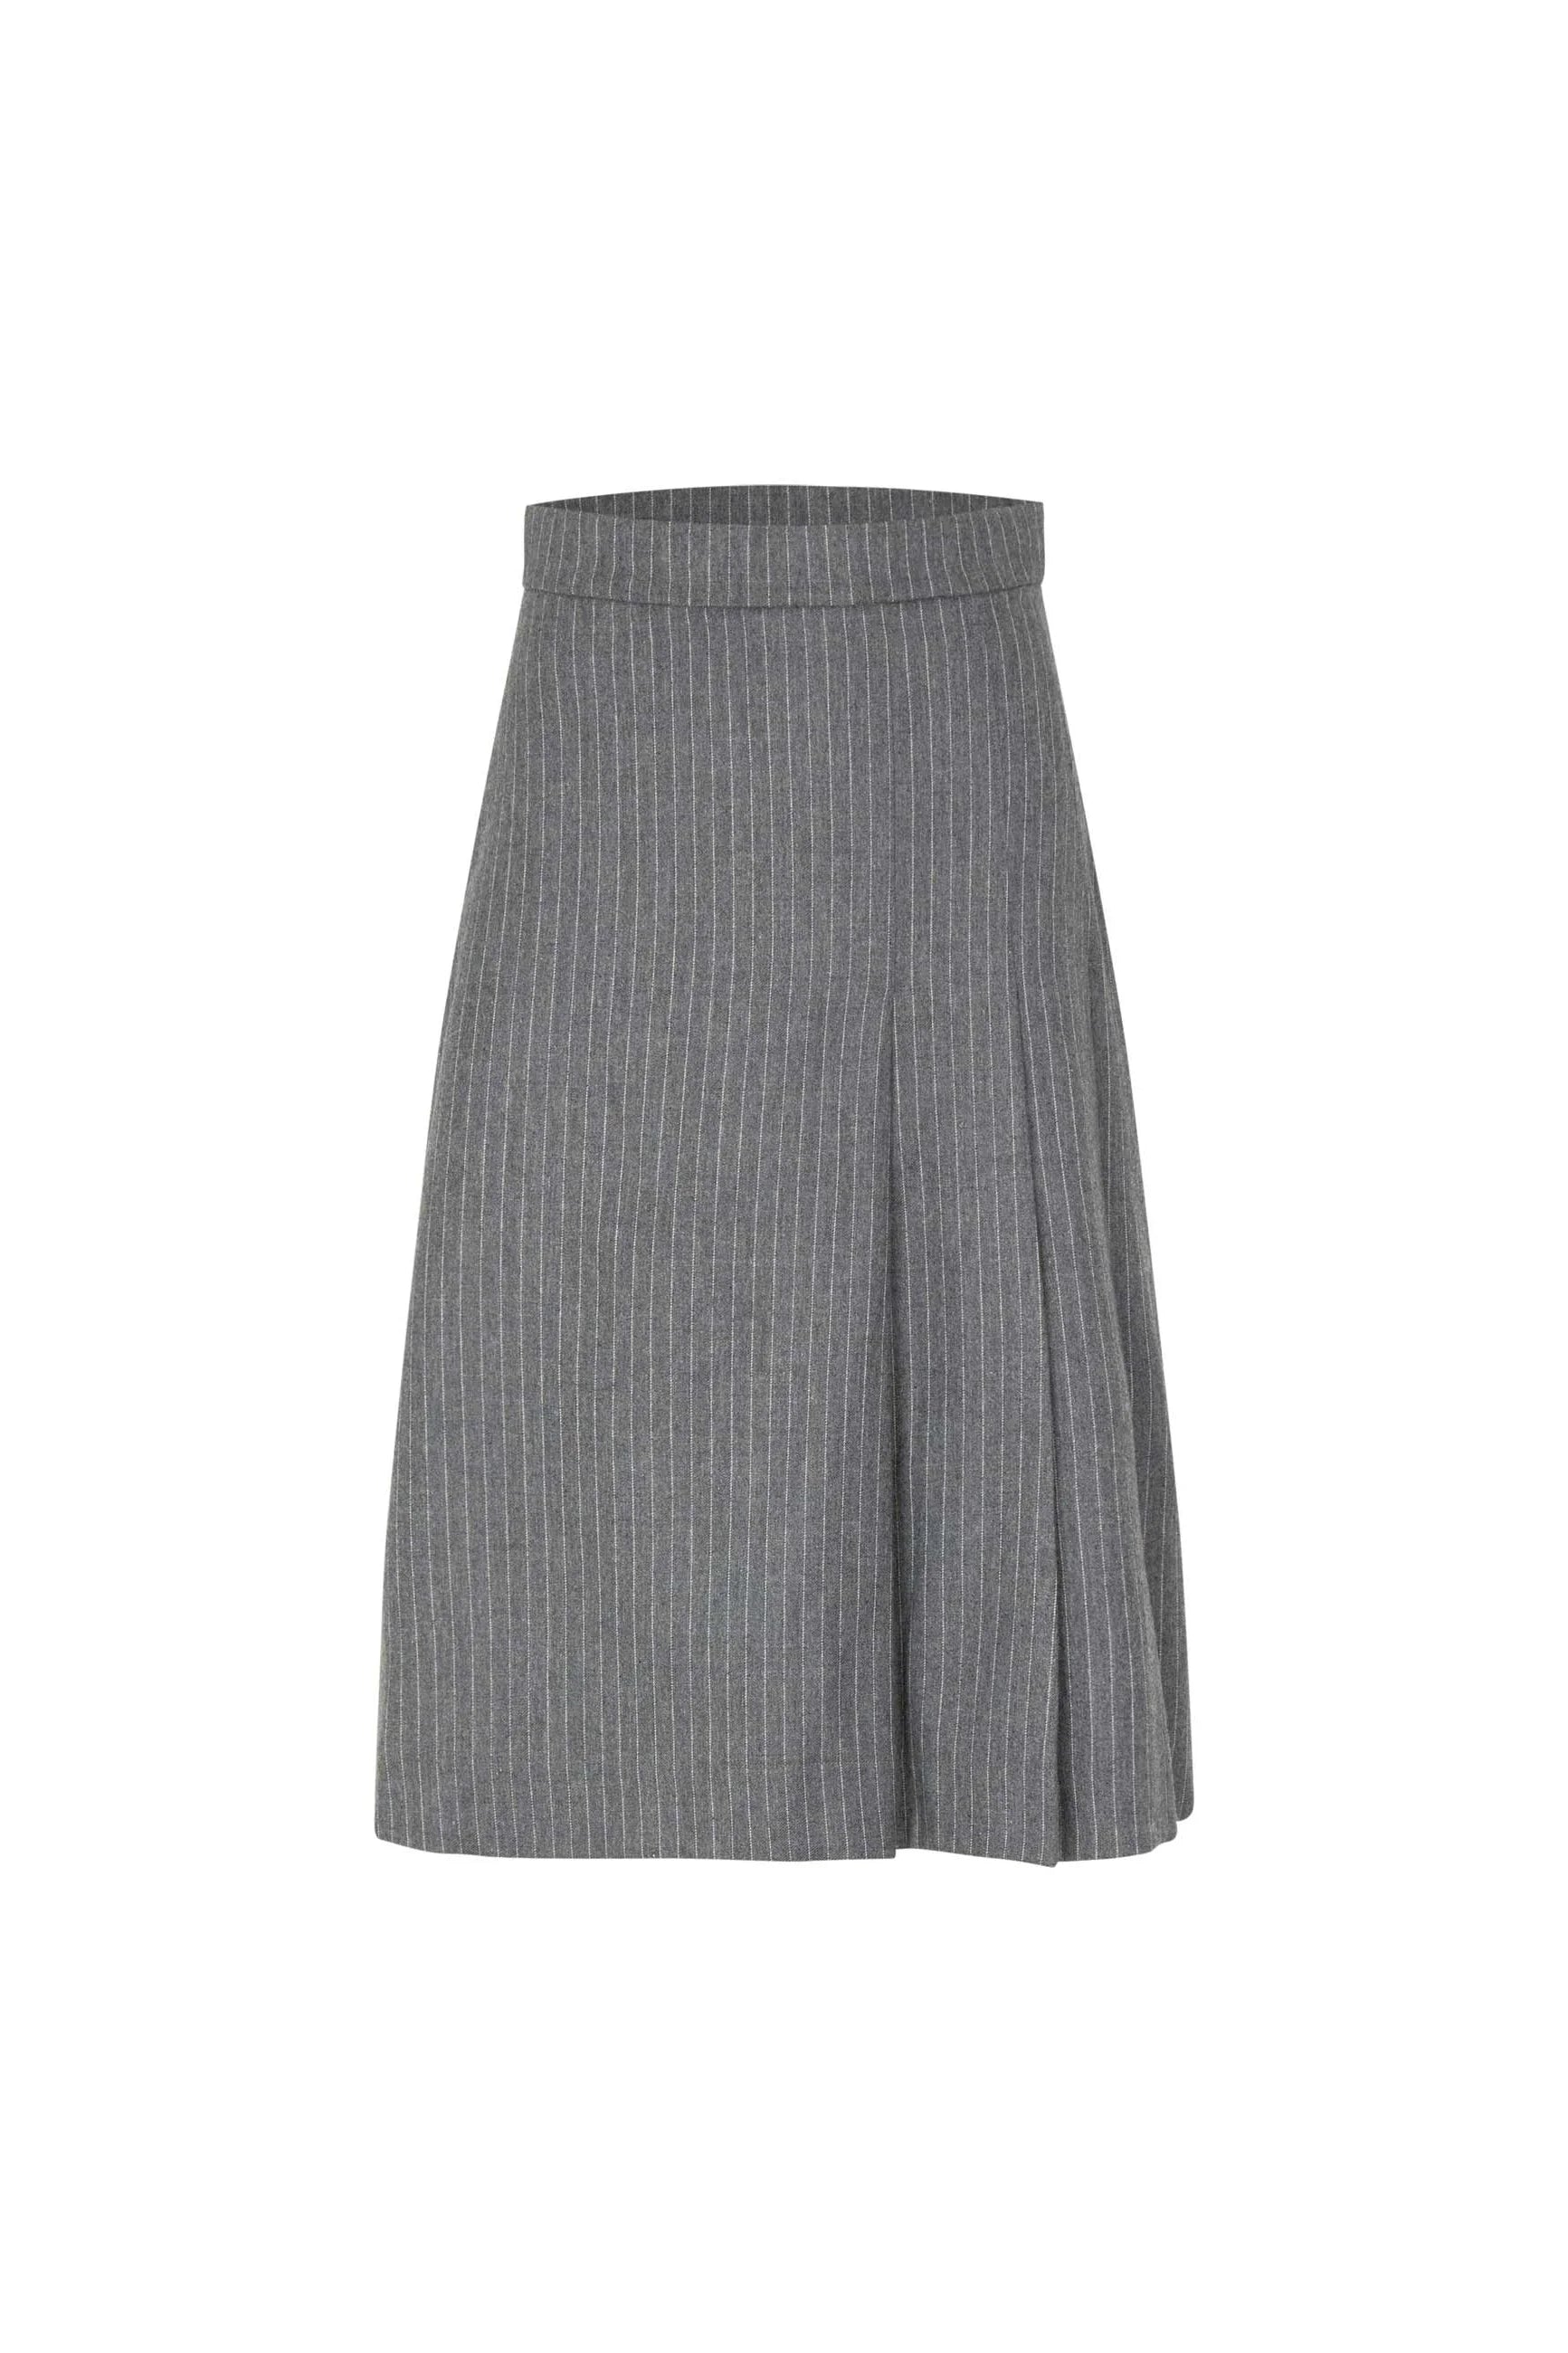 Nicoline Skirt